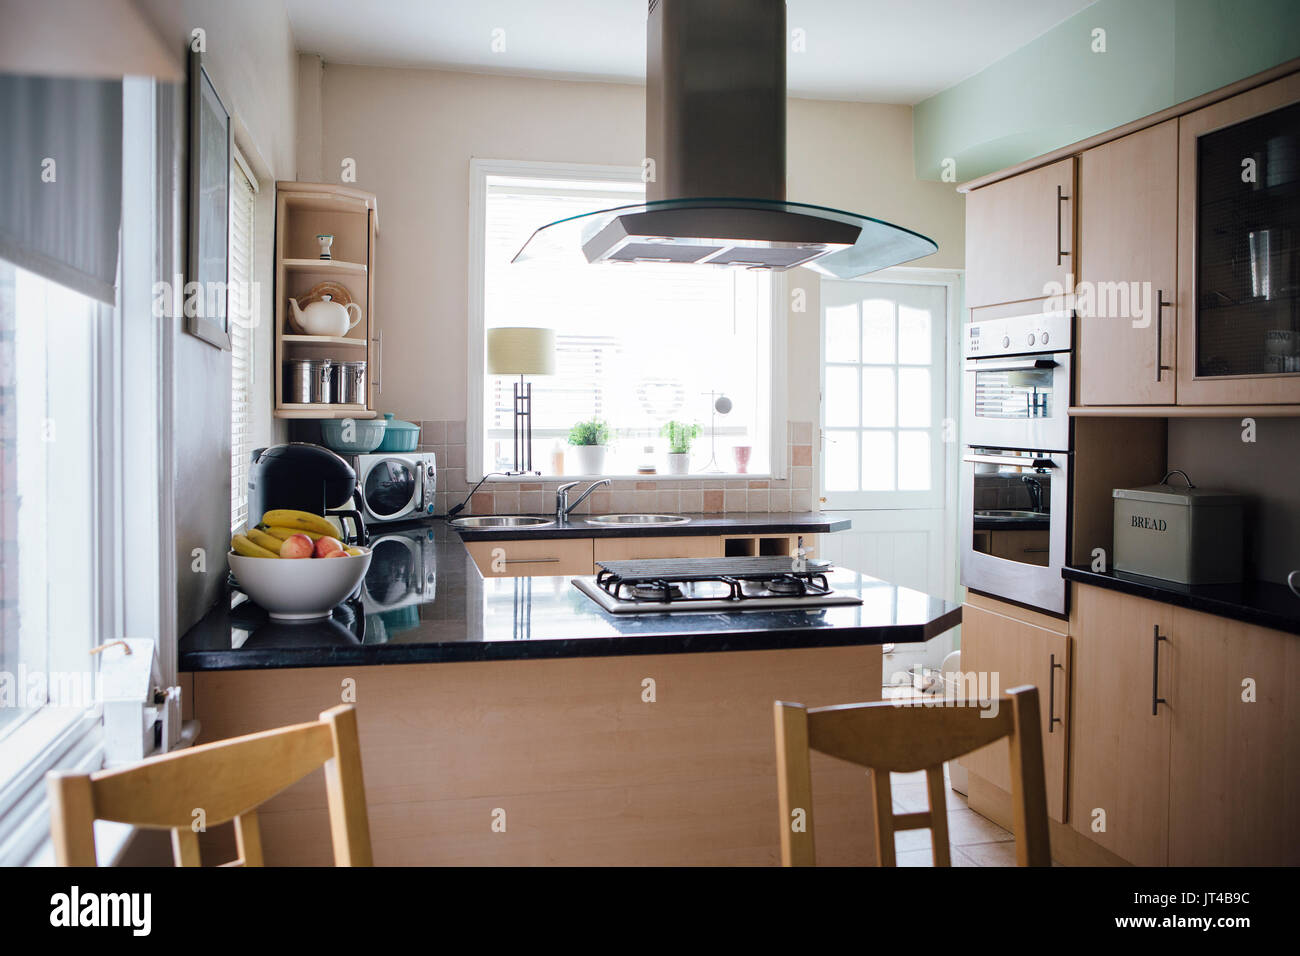 Horizontal image of an empty domestic kitchen. Stock Photo